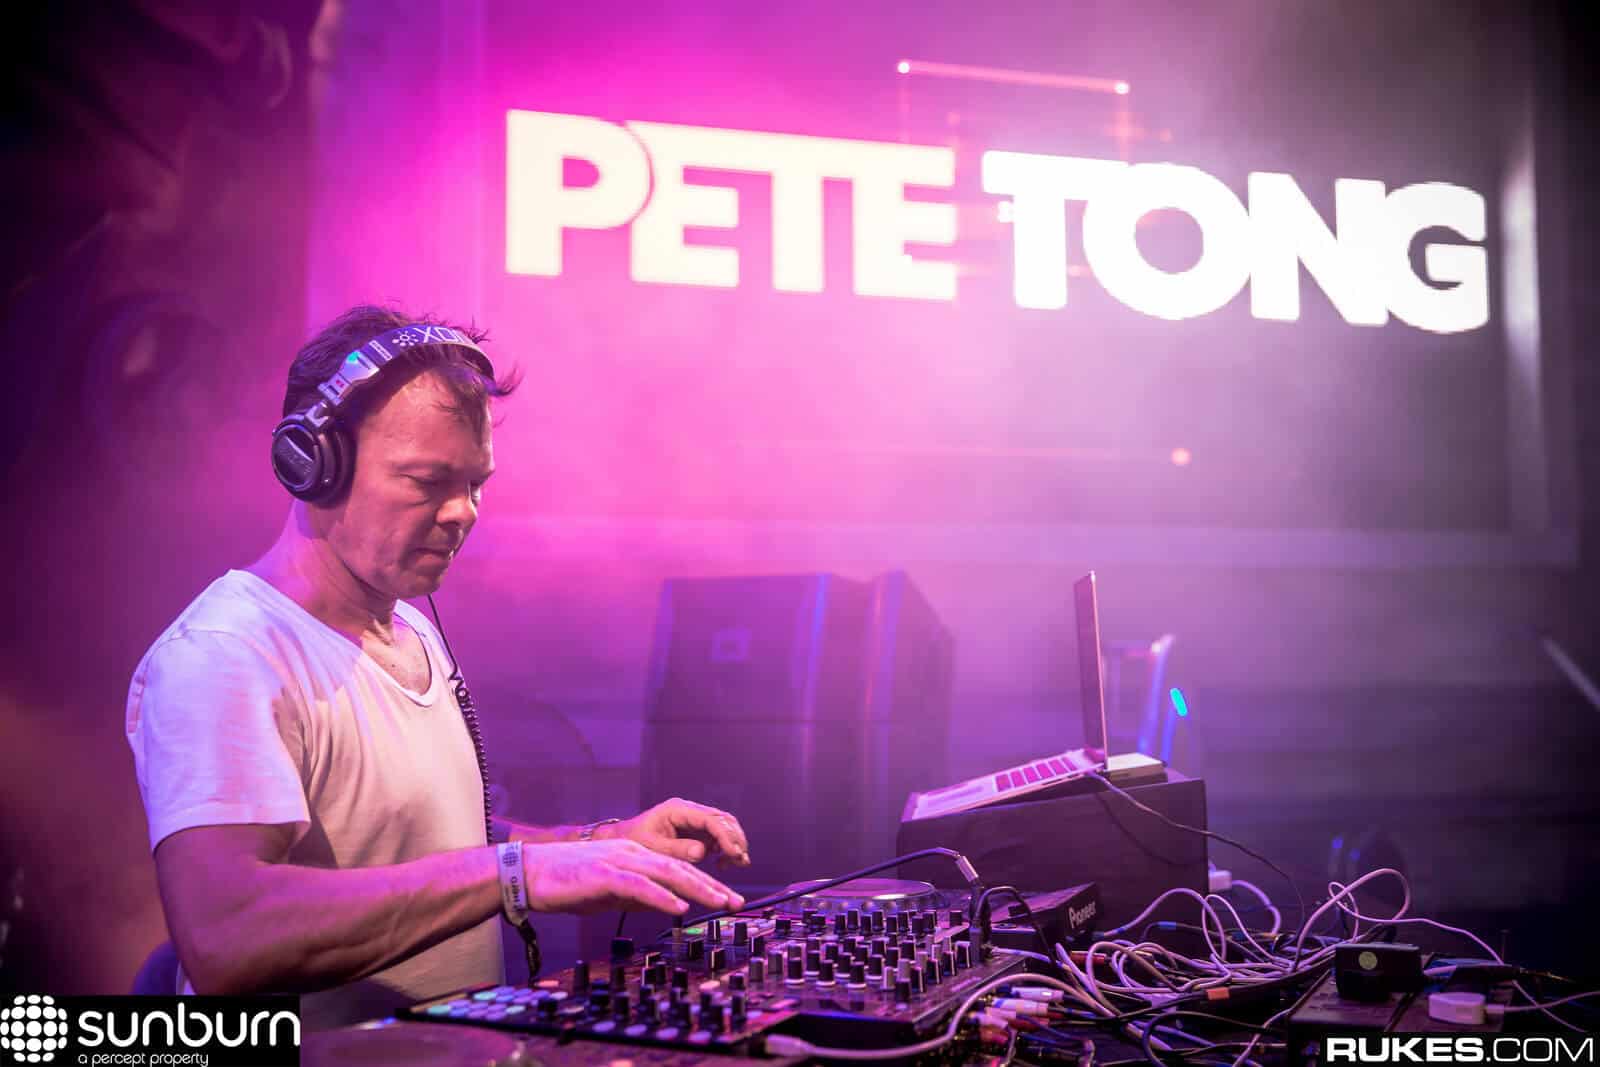 Pete Tong announces dates for ‘Ibiza Classics’ tour